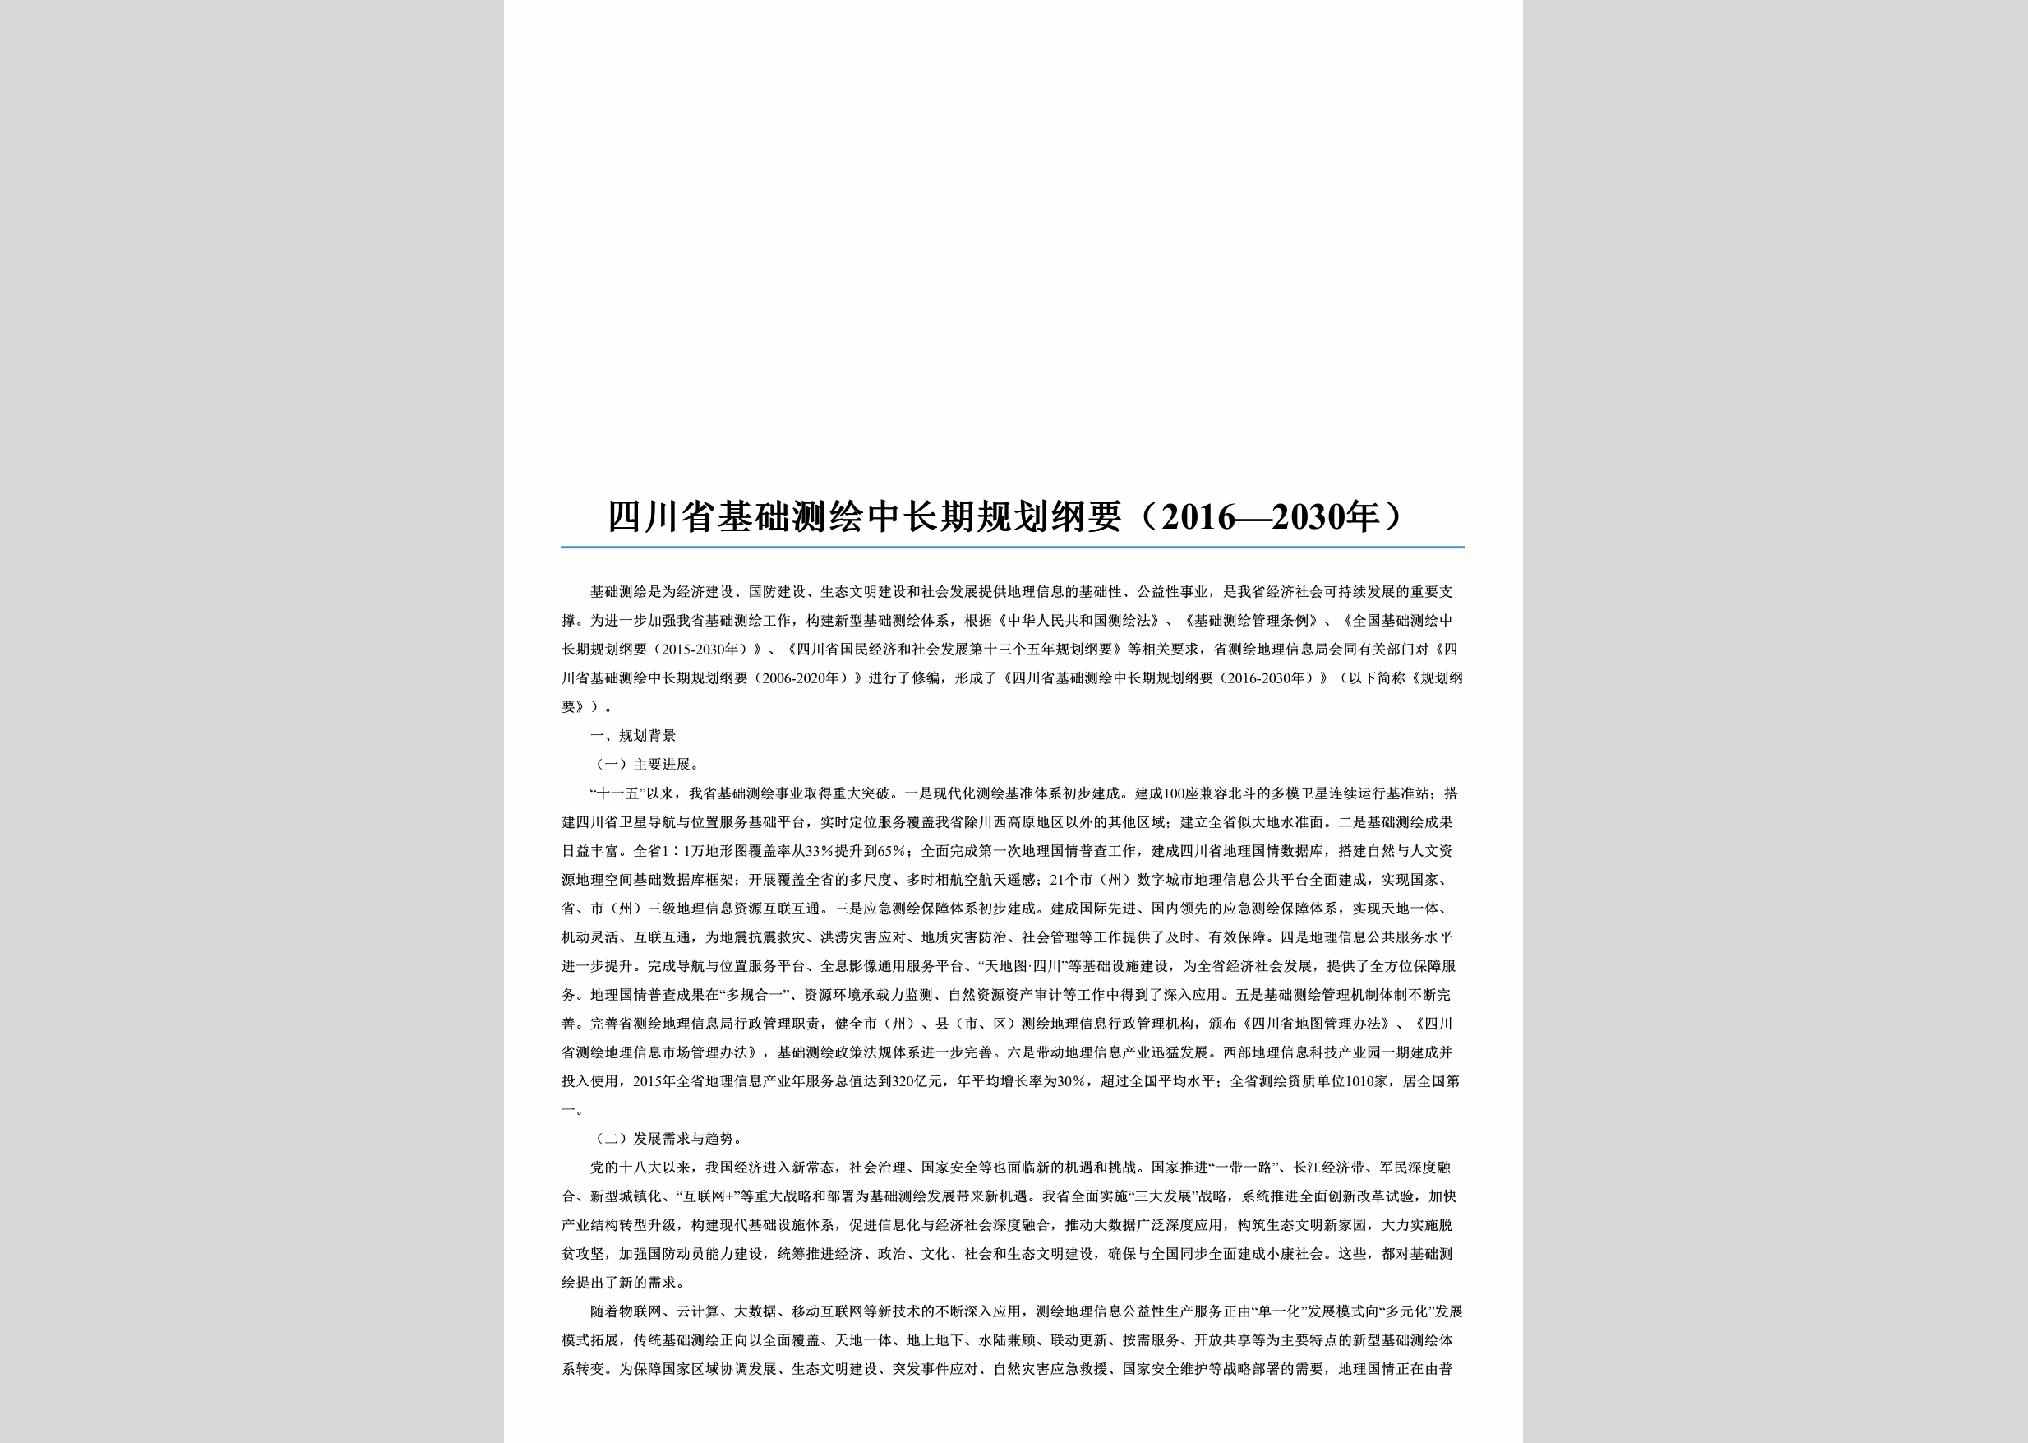 SC-JCCHGHGY-2016：四川省基础测绘中长期规划纲要（2016—2030年）